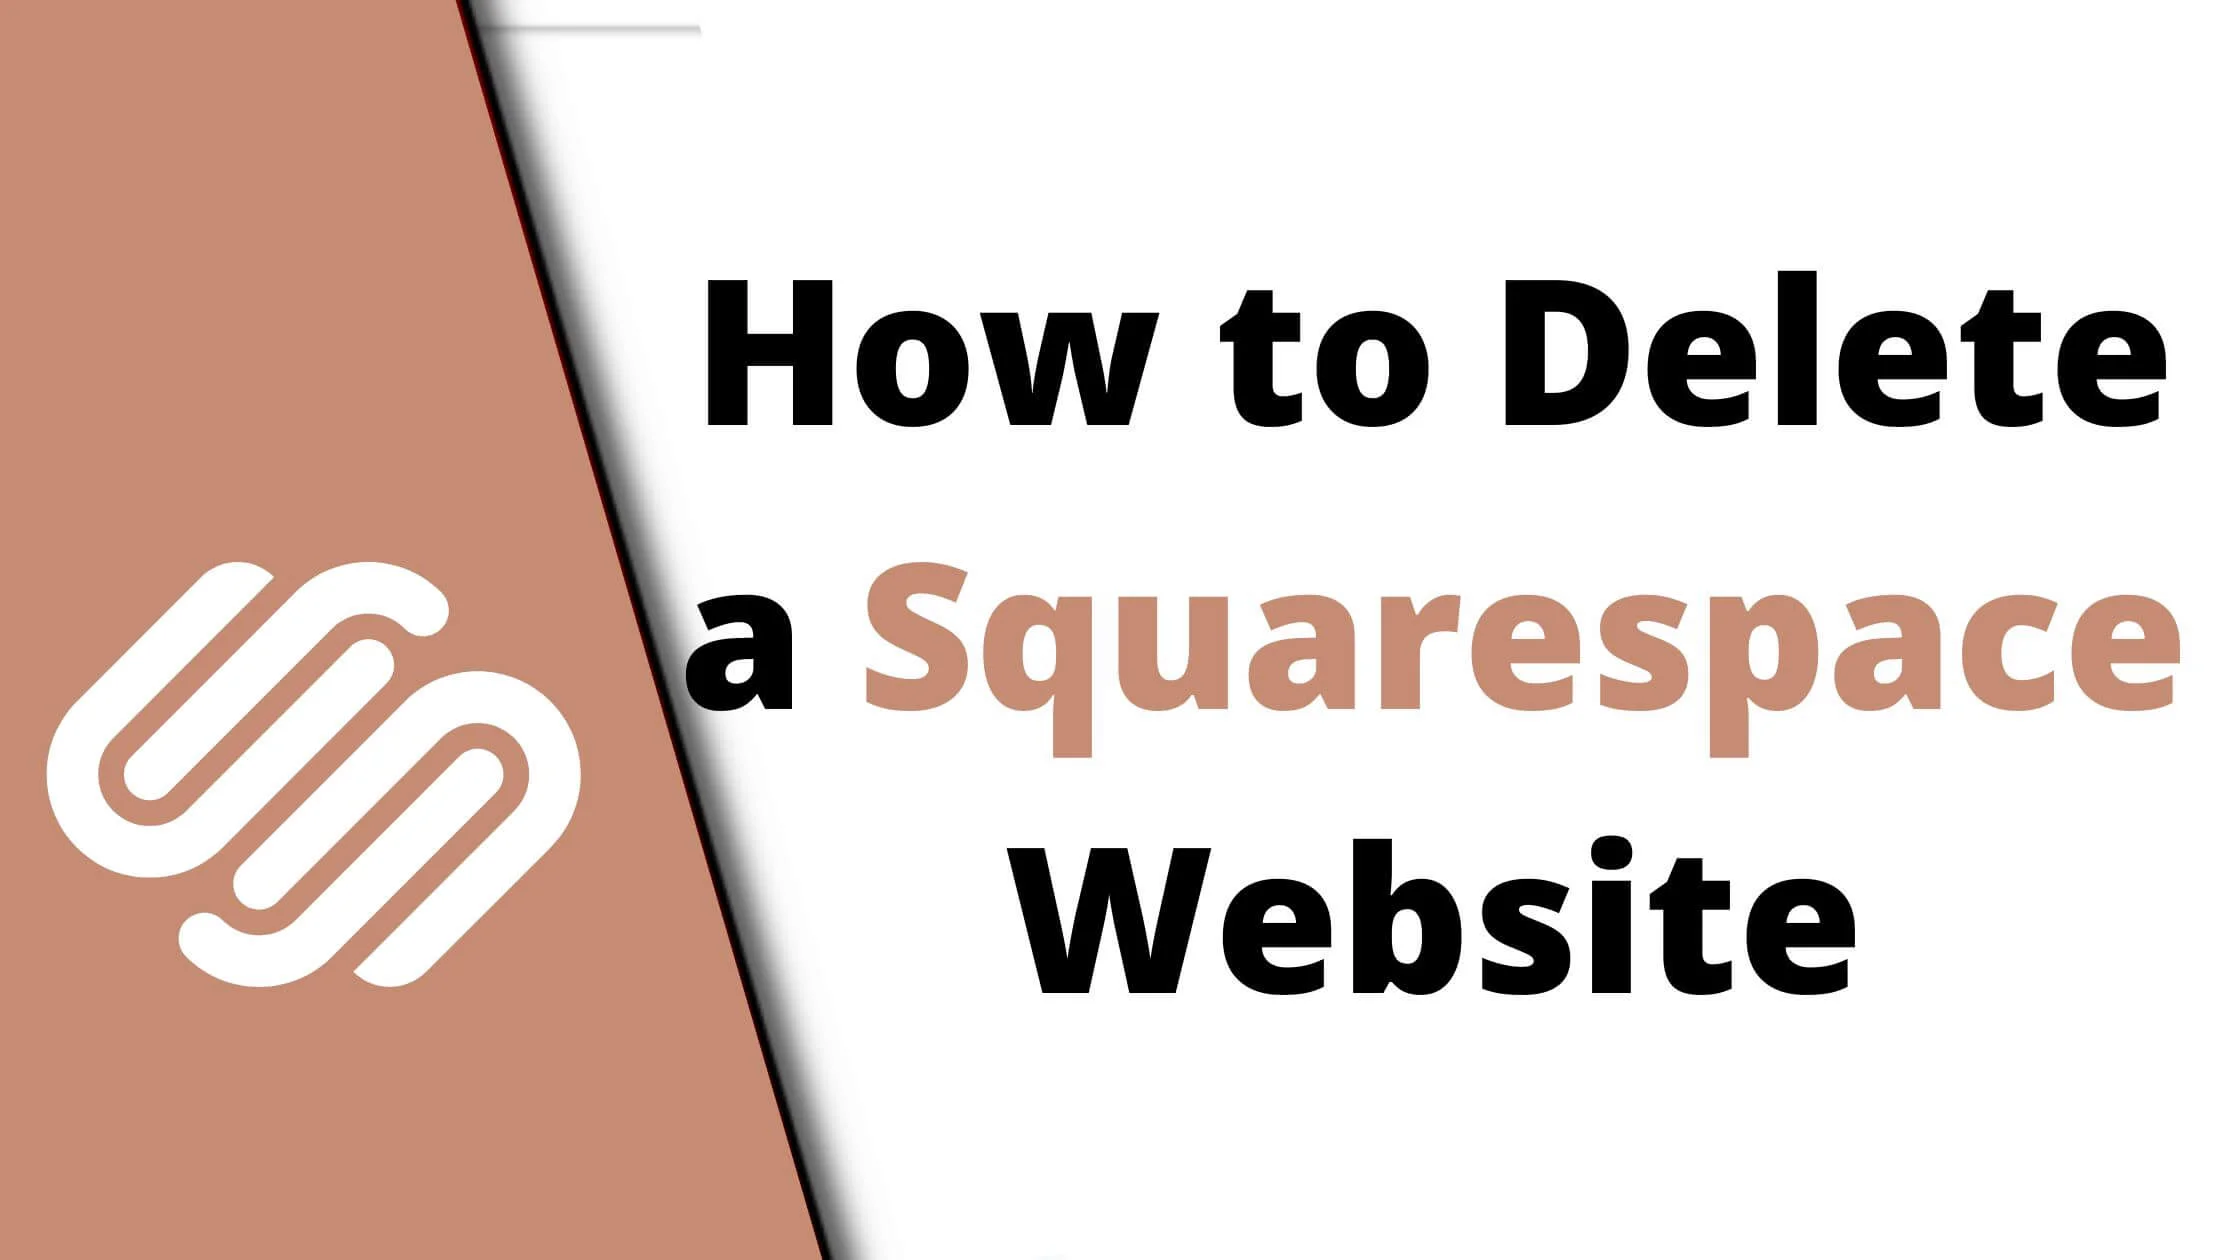 Delete a Squarespace Website